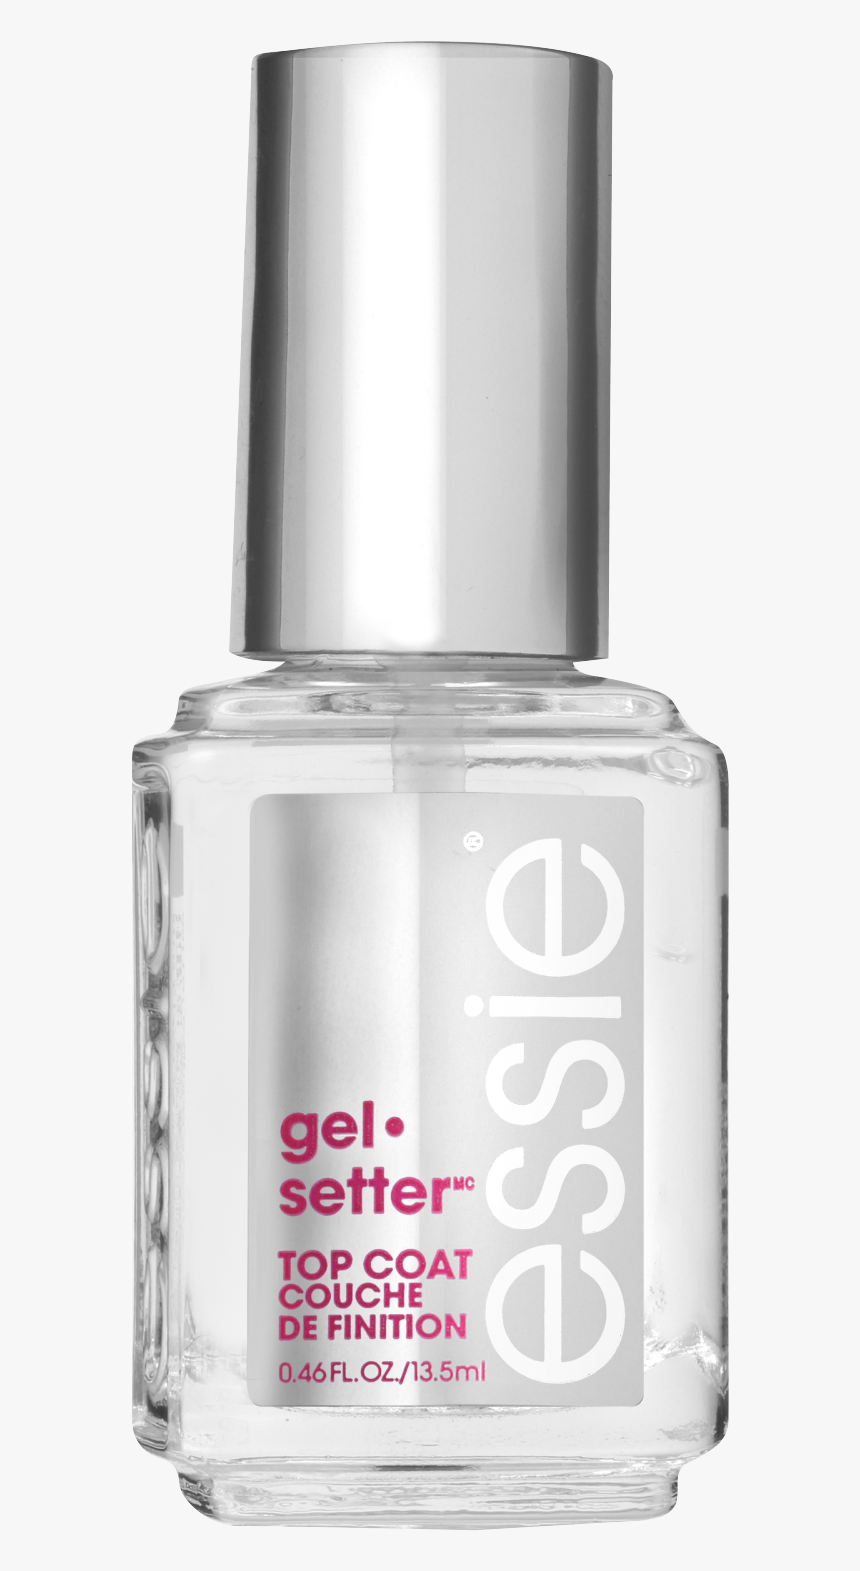 Transparent Nail Polish Bottle Png - Water Based Top Coat, Png Download, Free Download